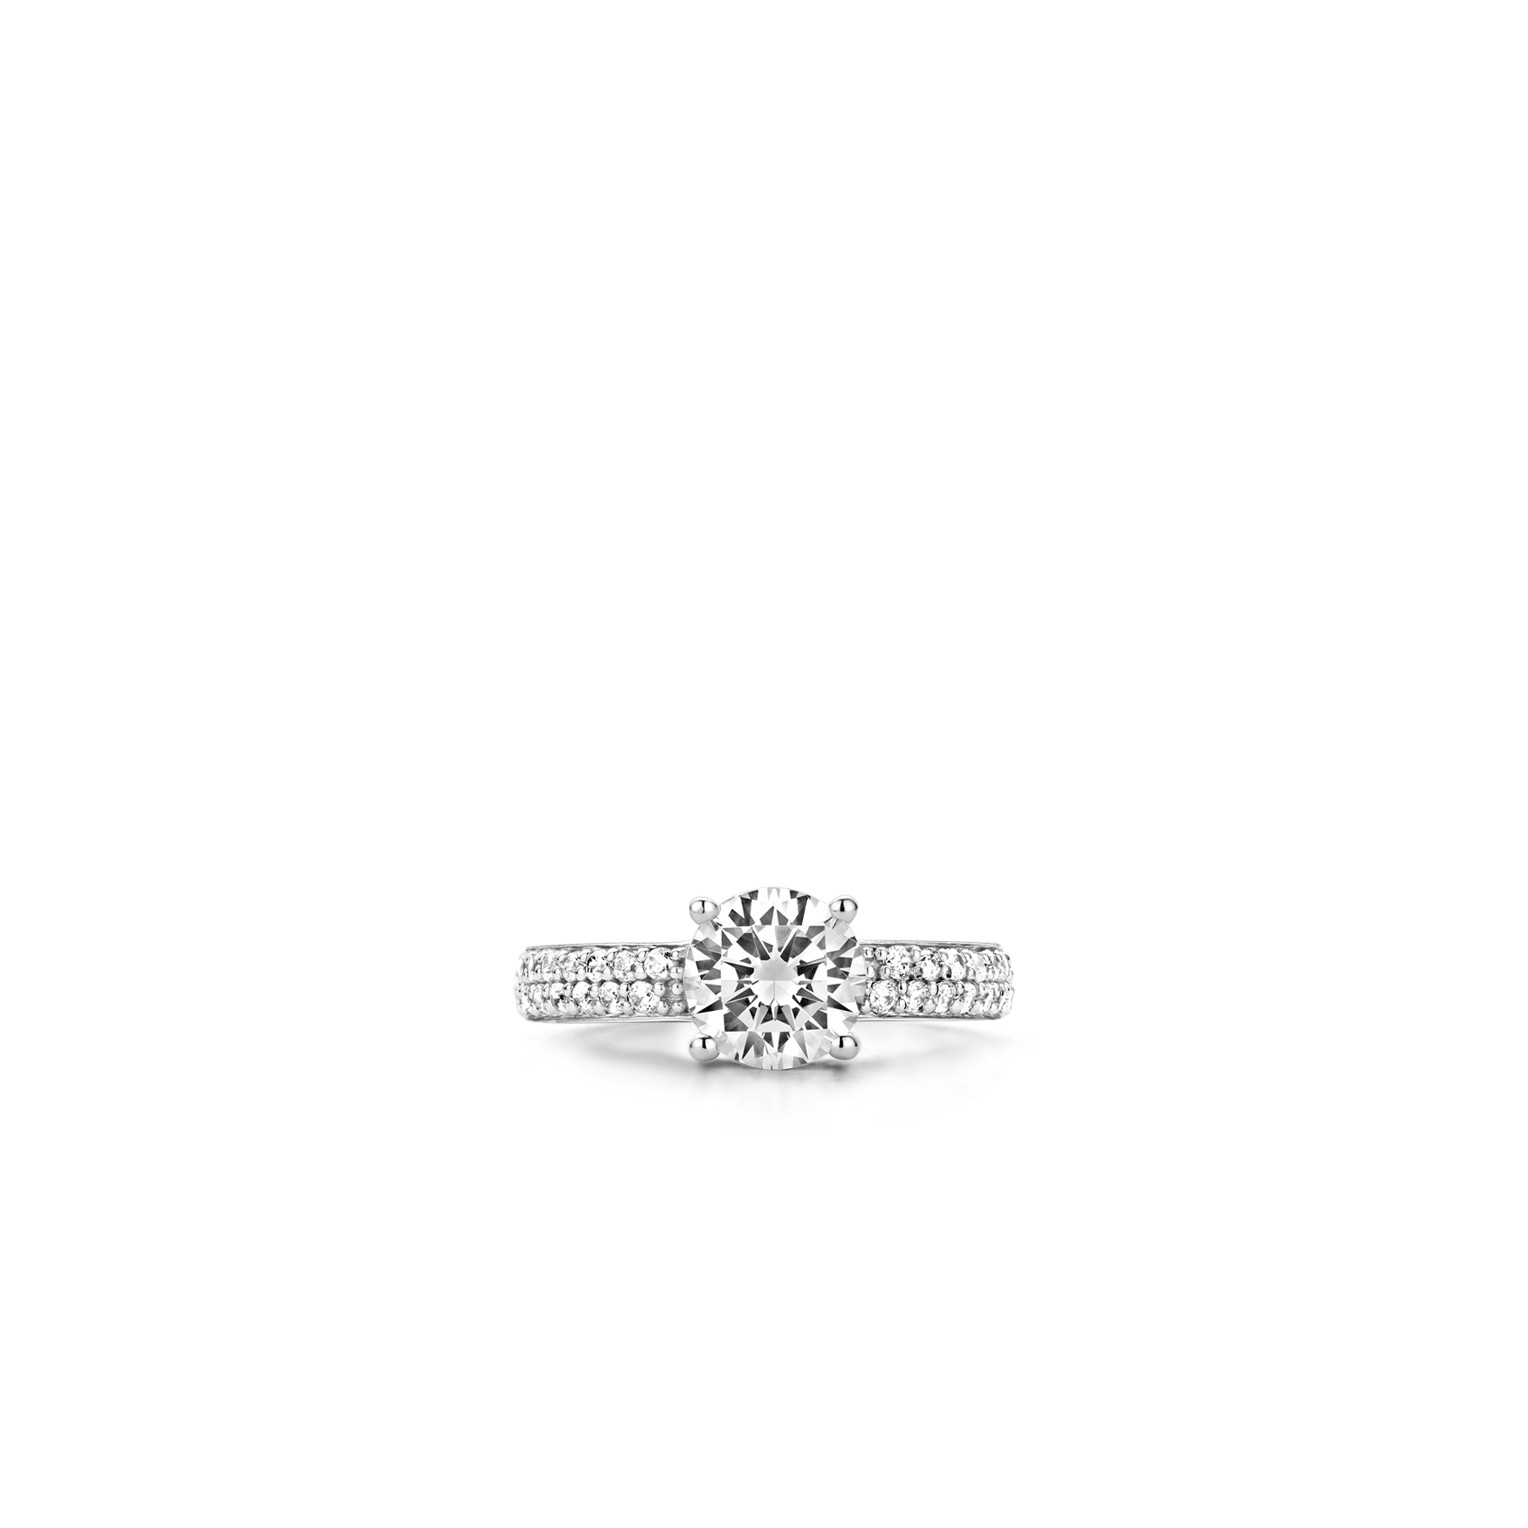 TI SENTO - Milano Ring 1737ZI Image 3 Gala Jewelers Inc. White Oak, PA